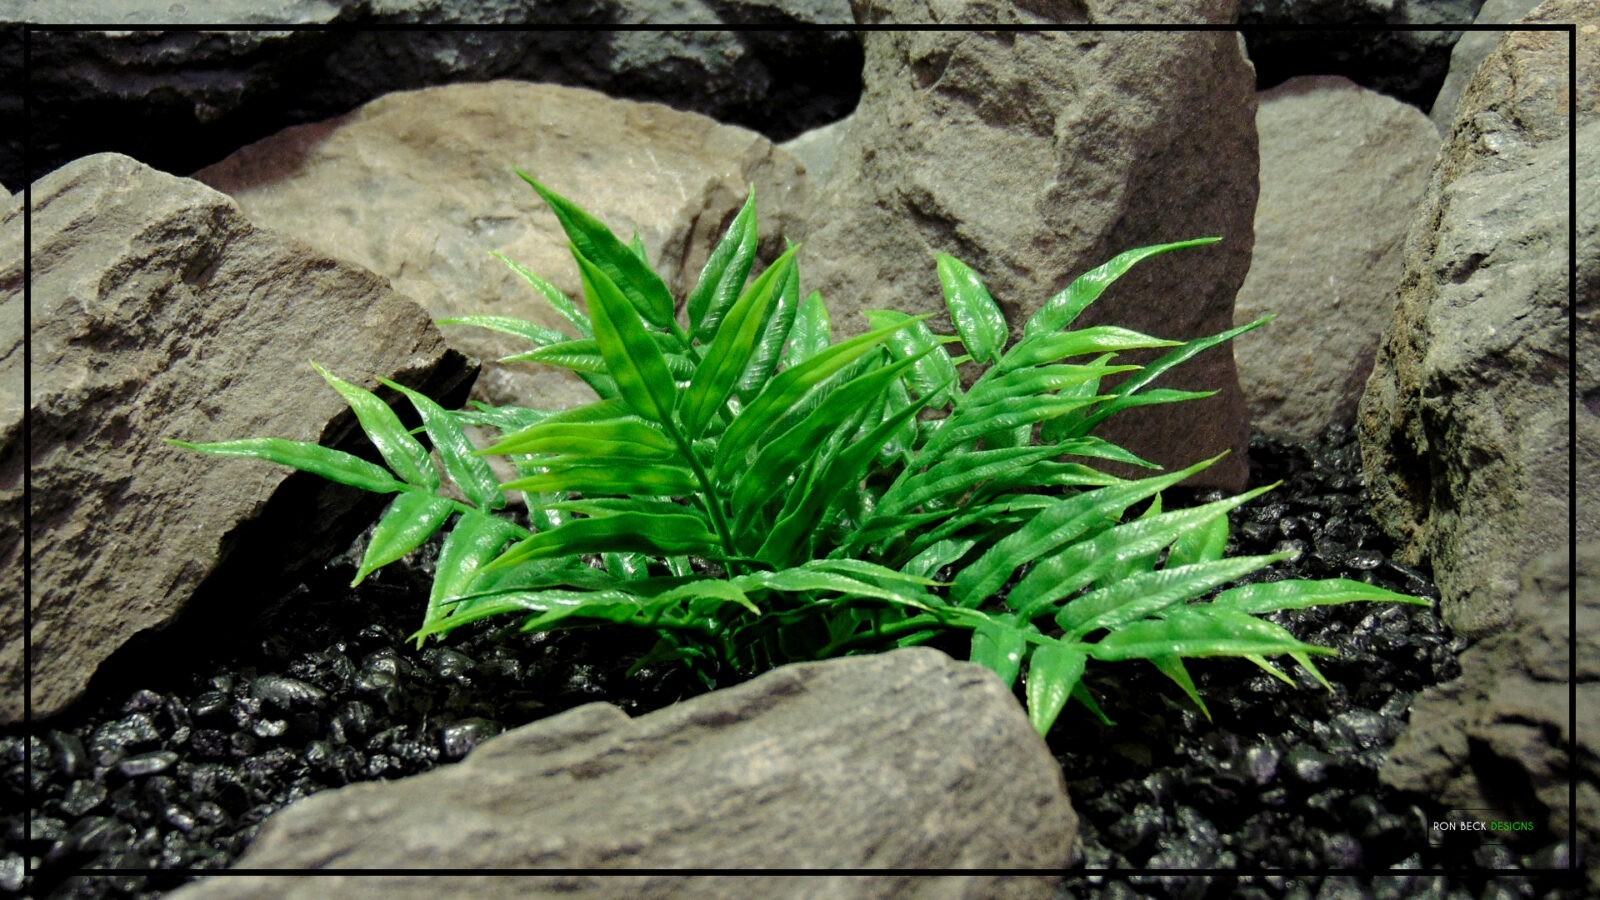 Artificial Pinnate Leaf Bush - Aquarium or Reptile Habitat Plantparp452.jpg 3